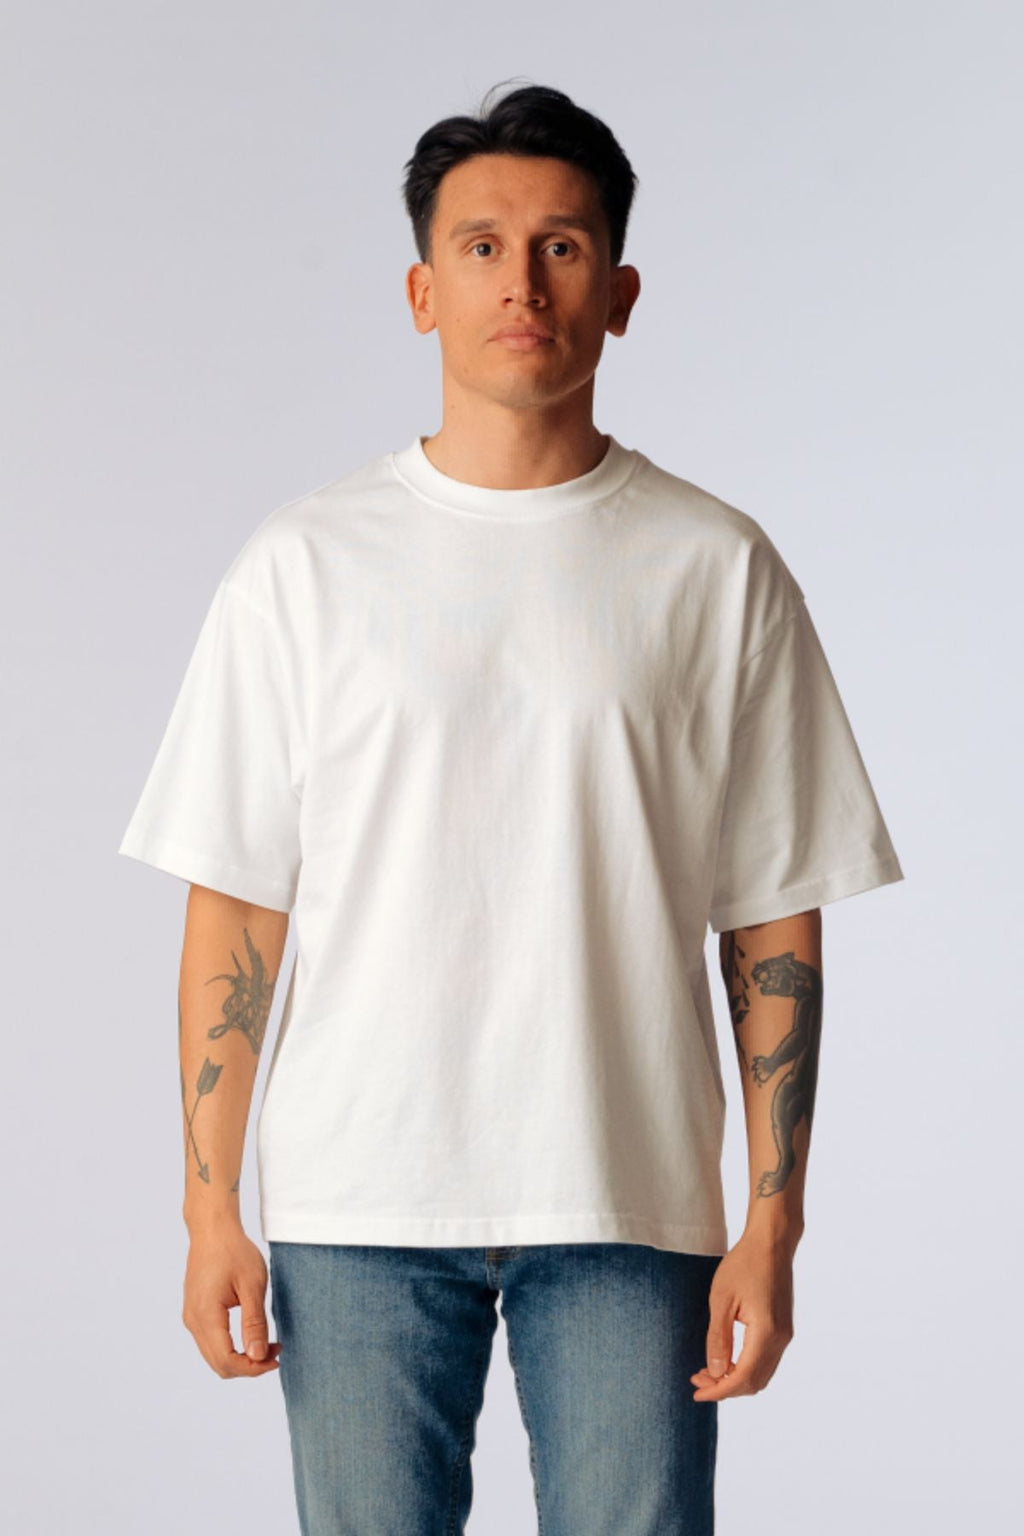 Camiseta Boxfit - Blanca